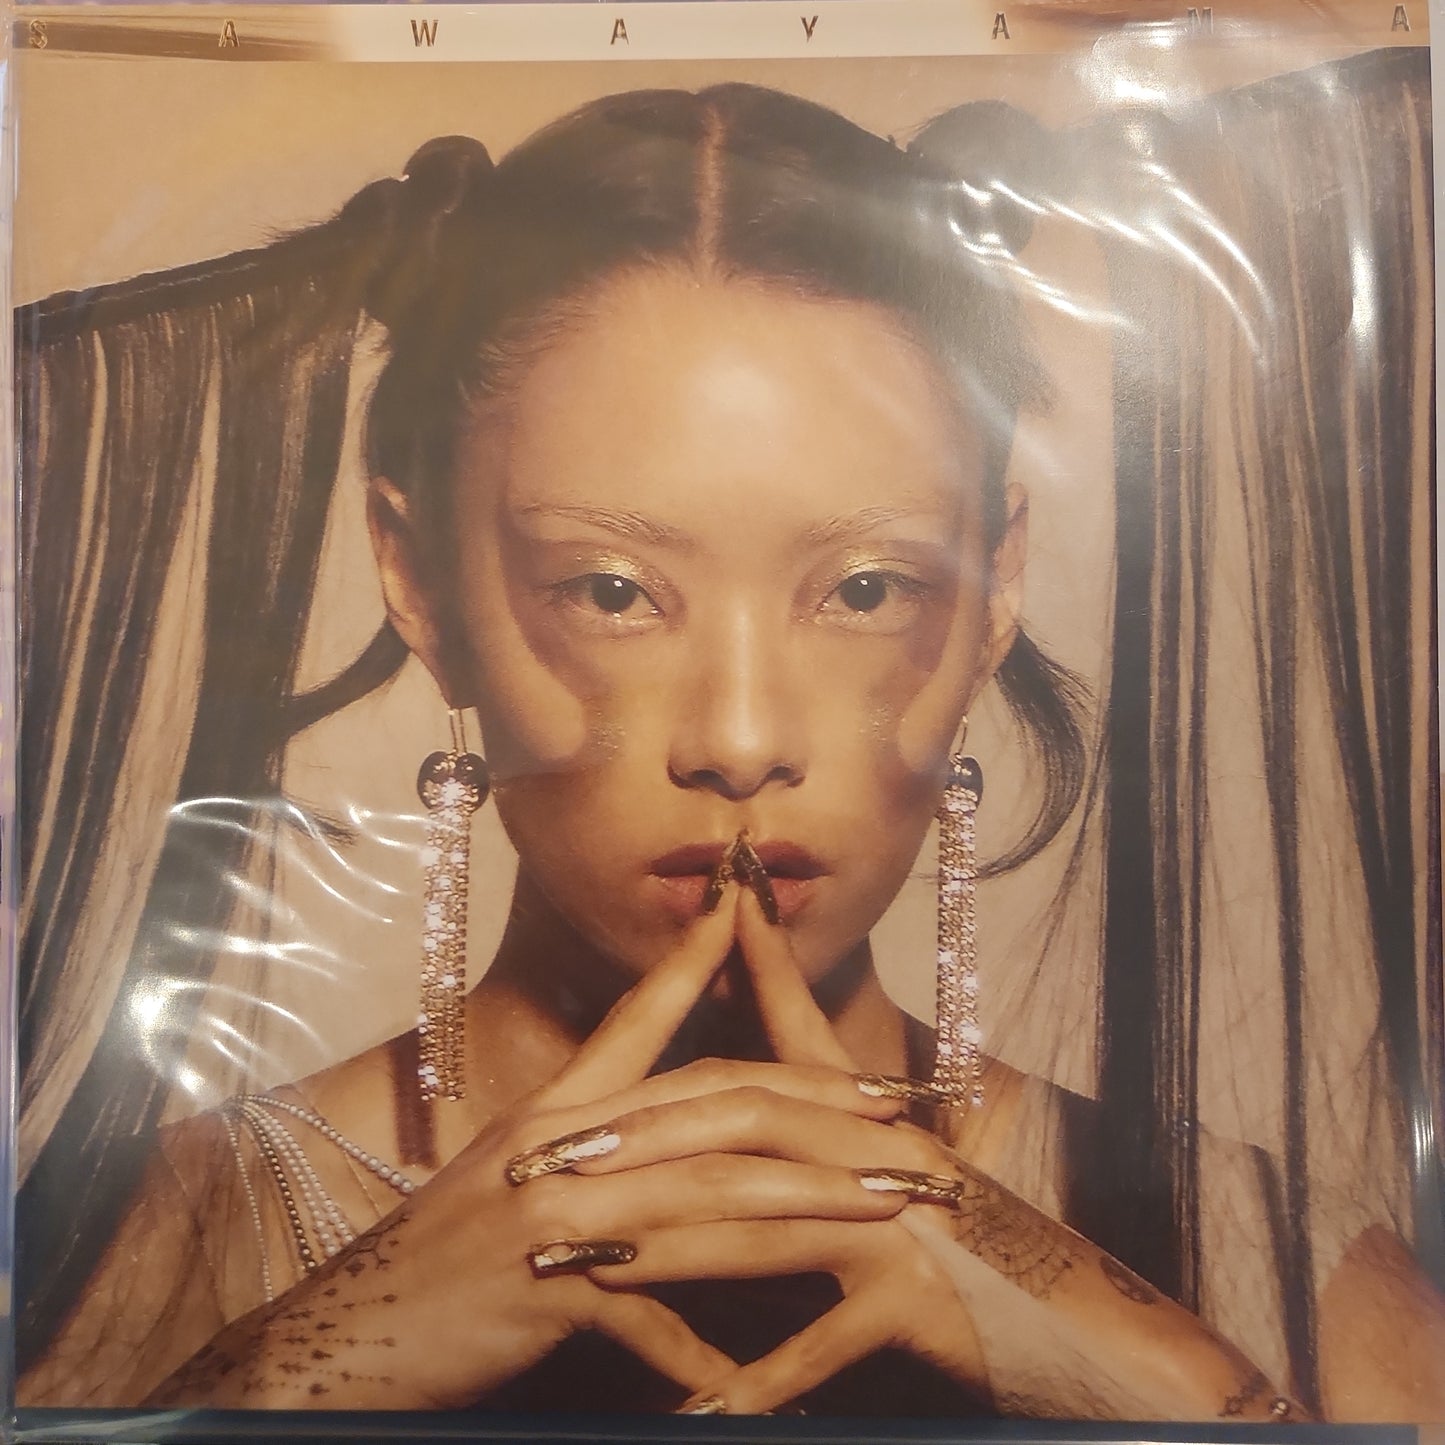 Rina Sawayama - Sawayama - Limited Gold Vinyl LP